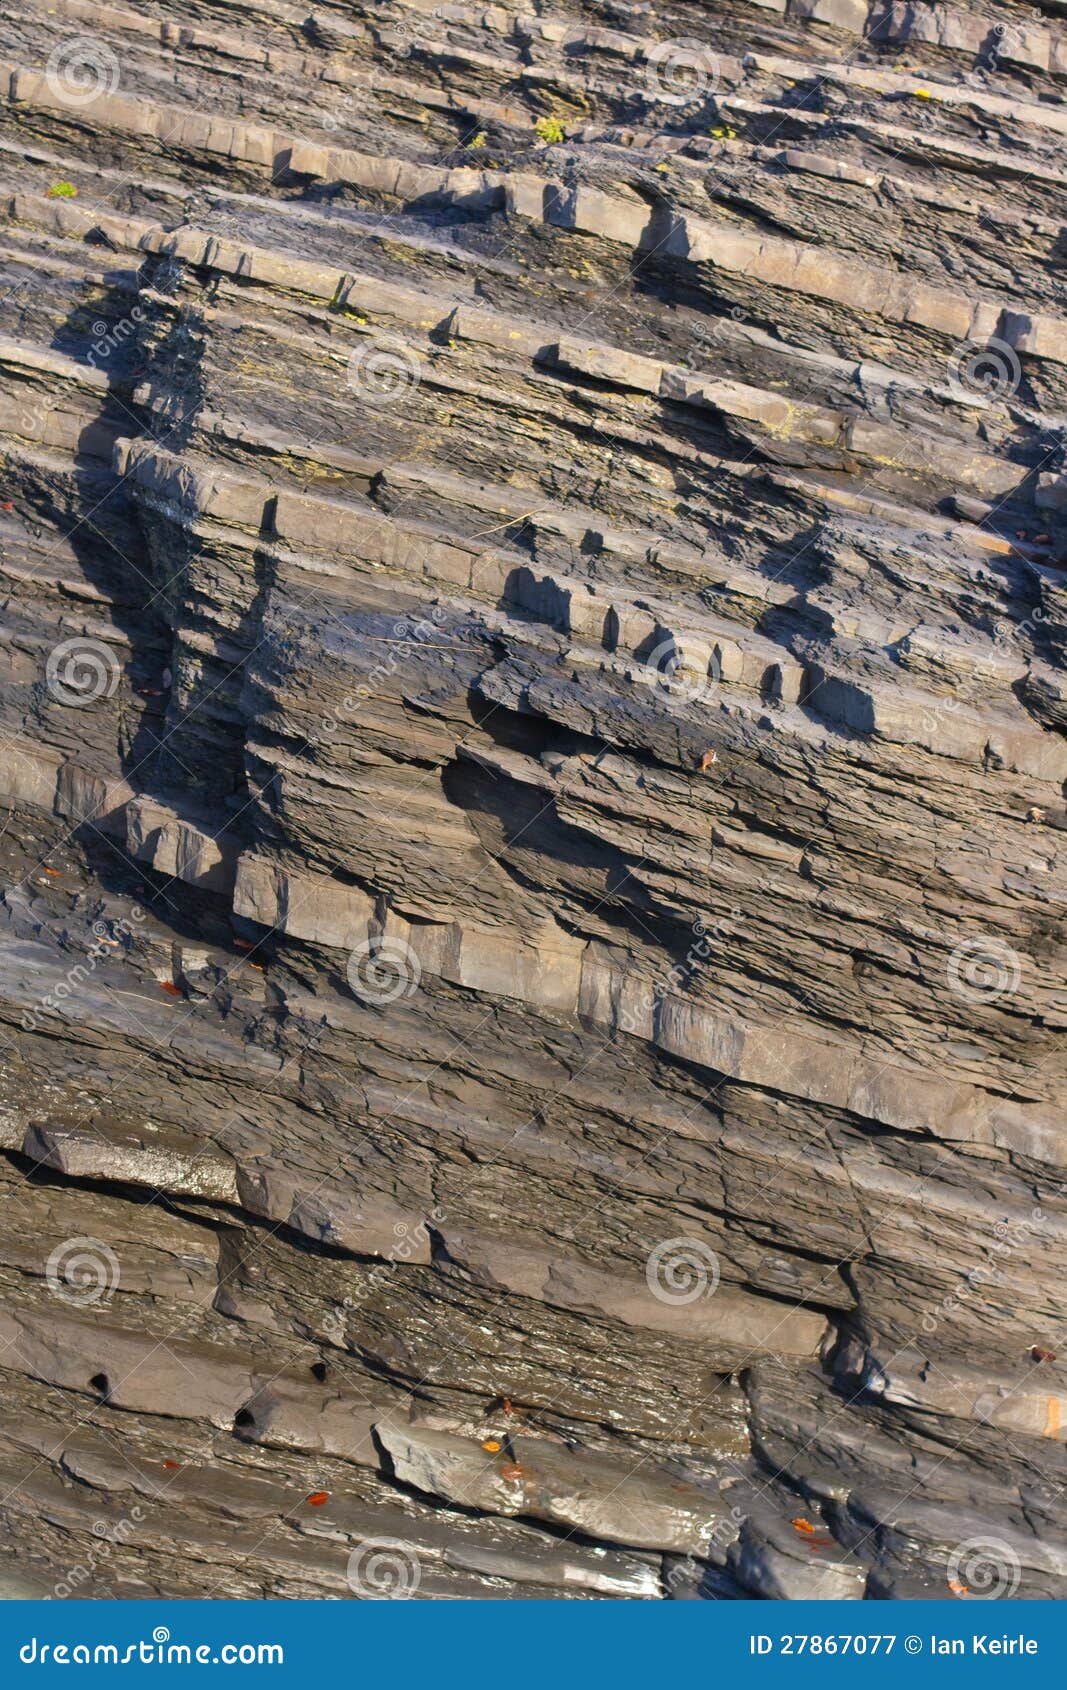 sedimentary rock layers